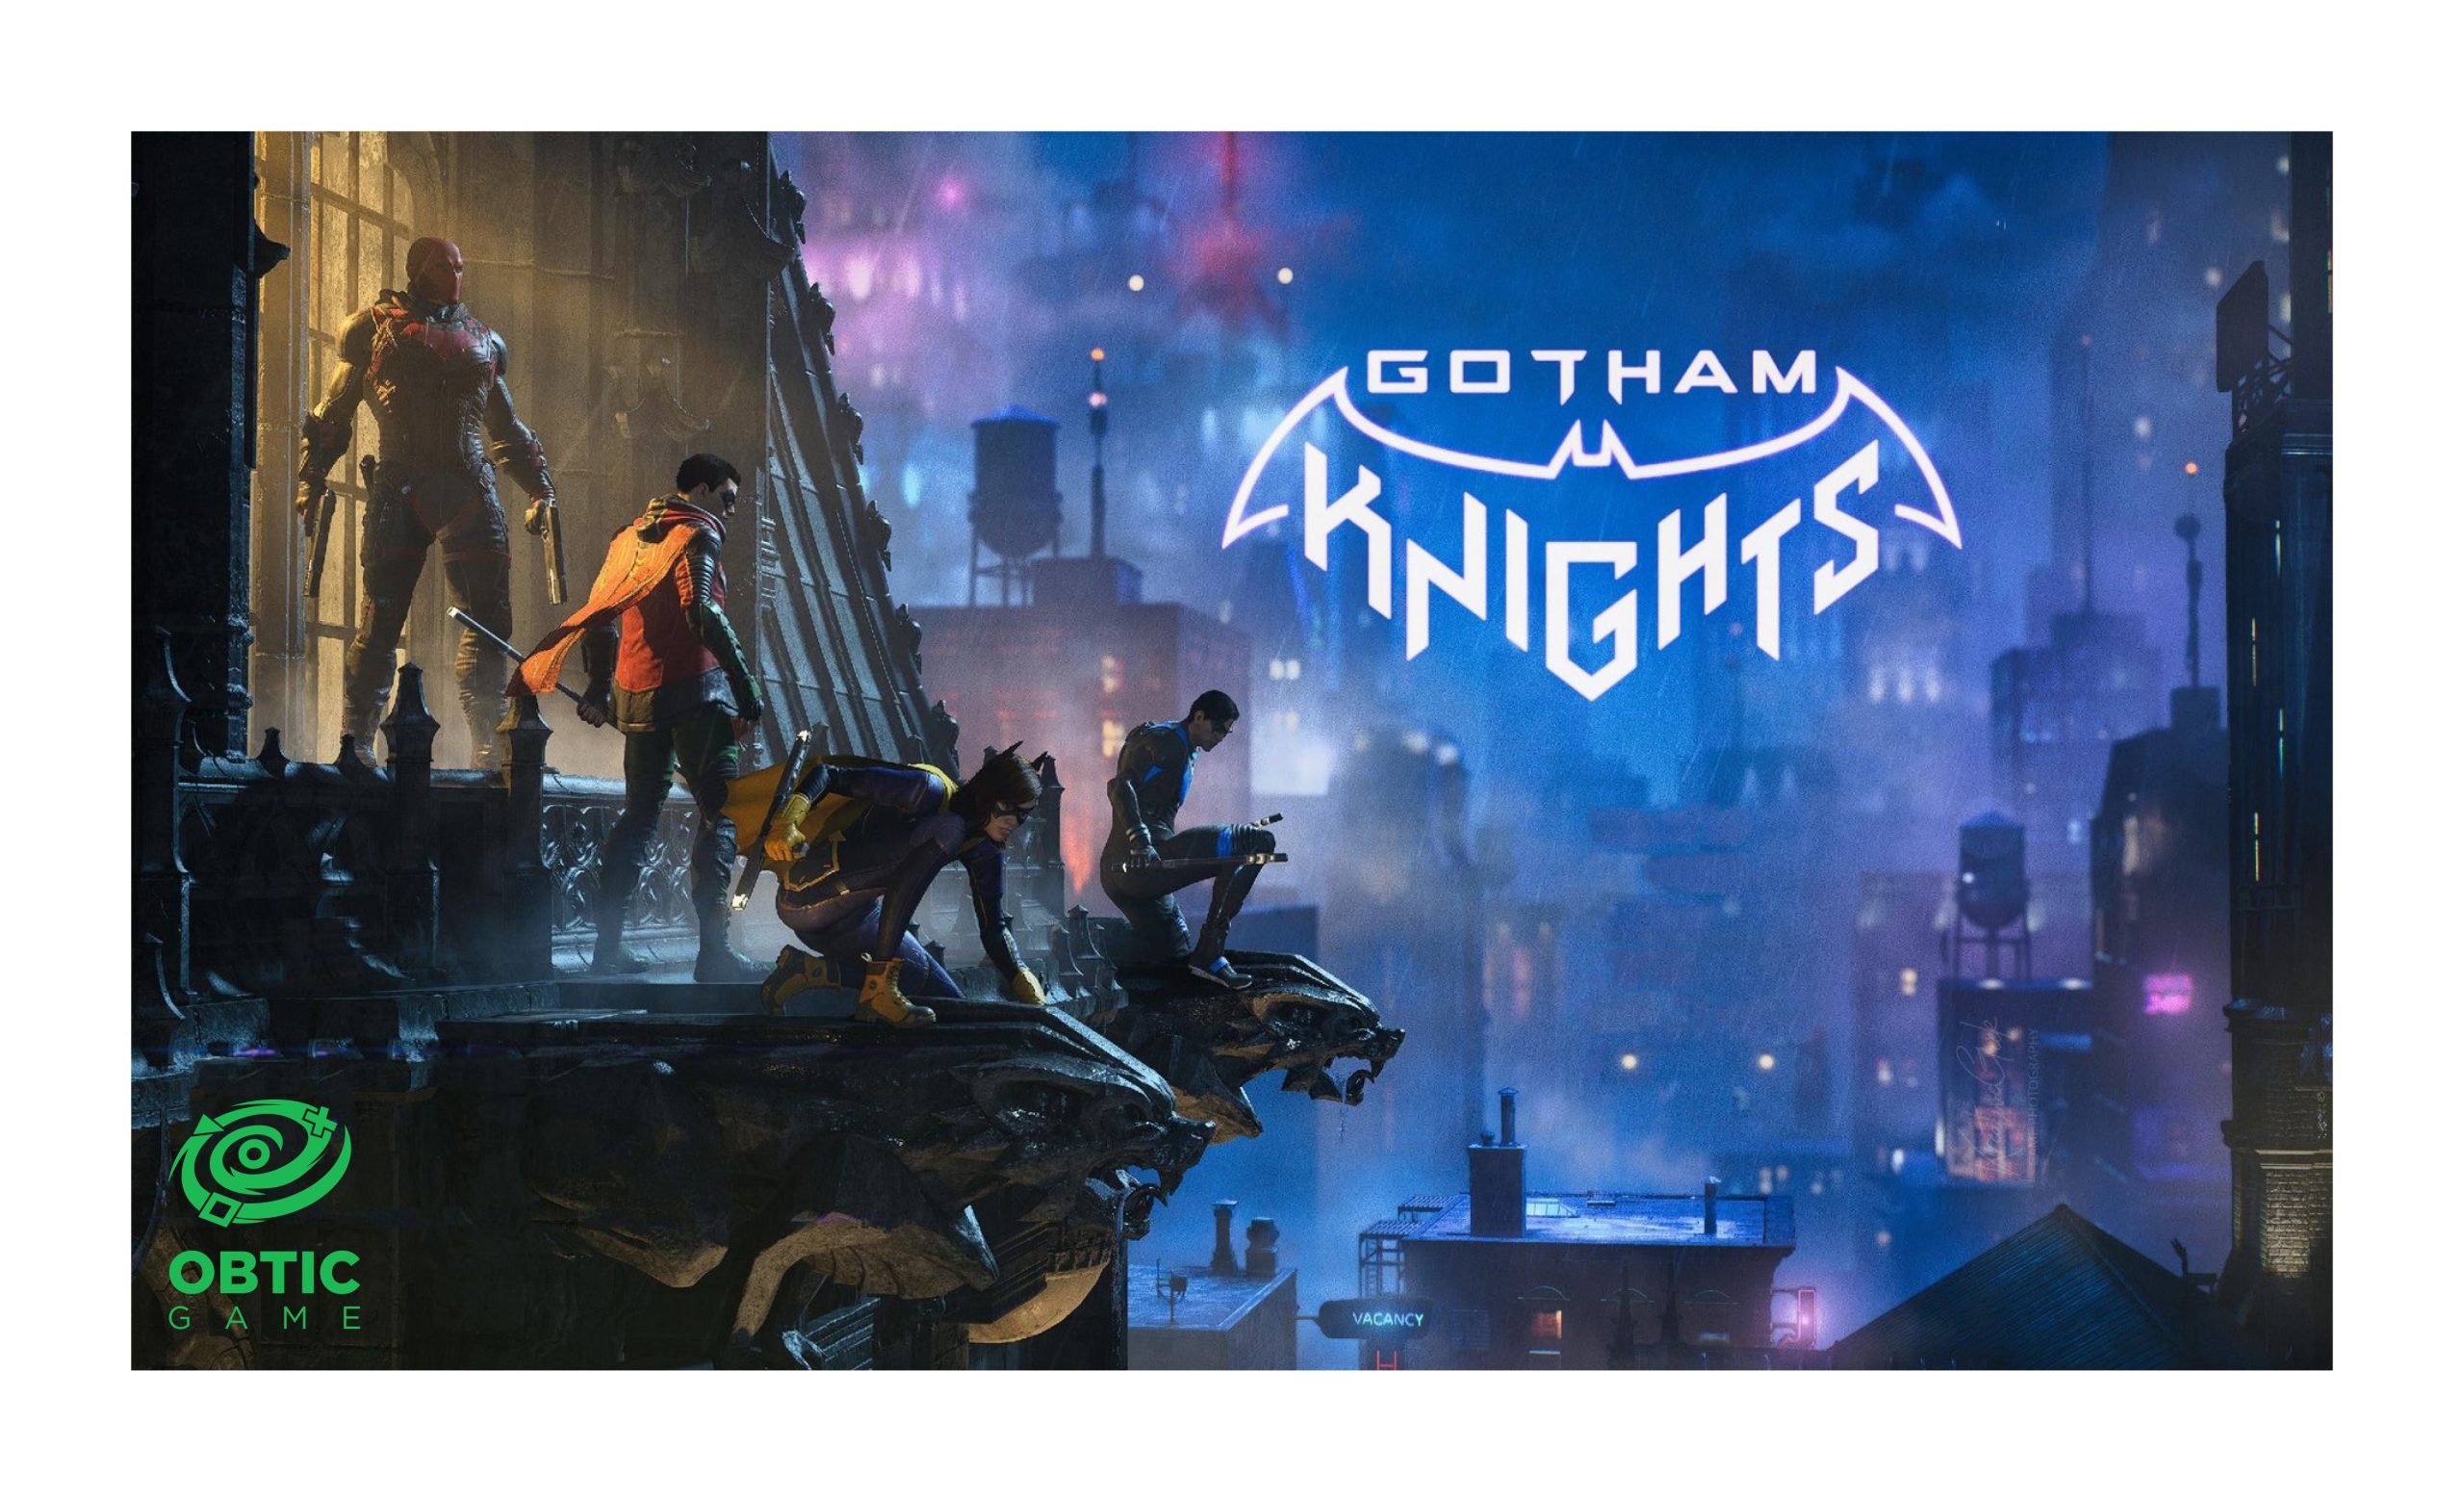  Gotham Knights 